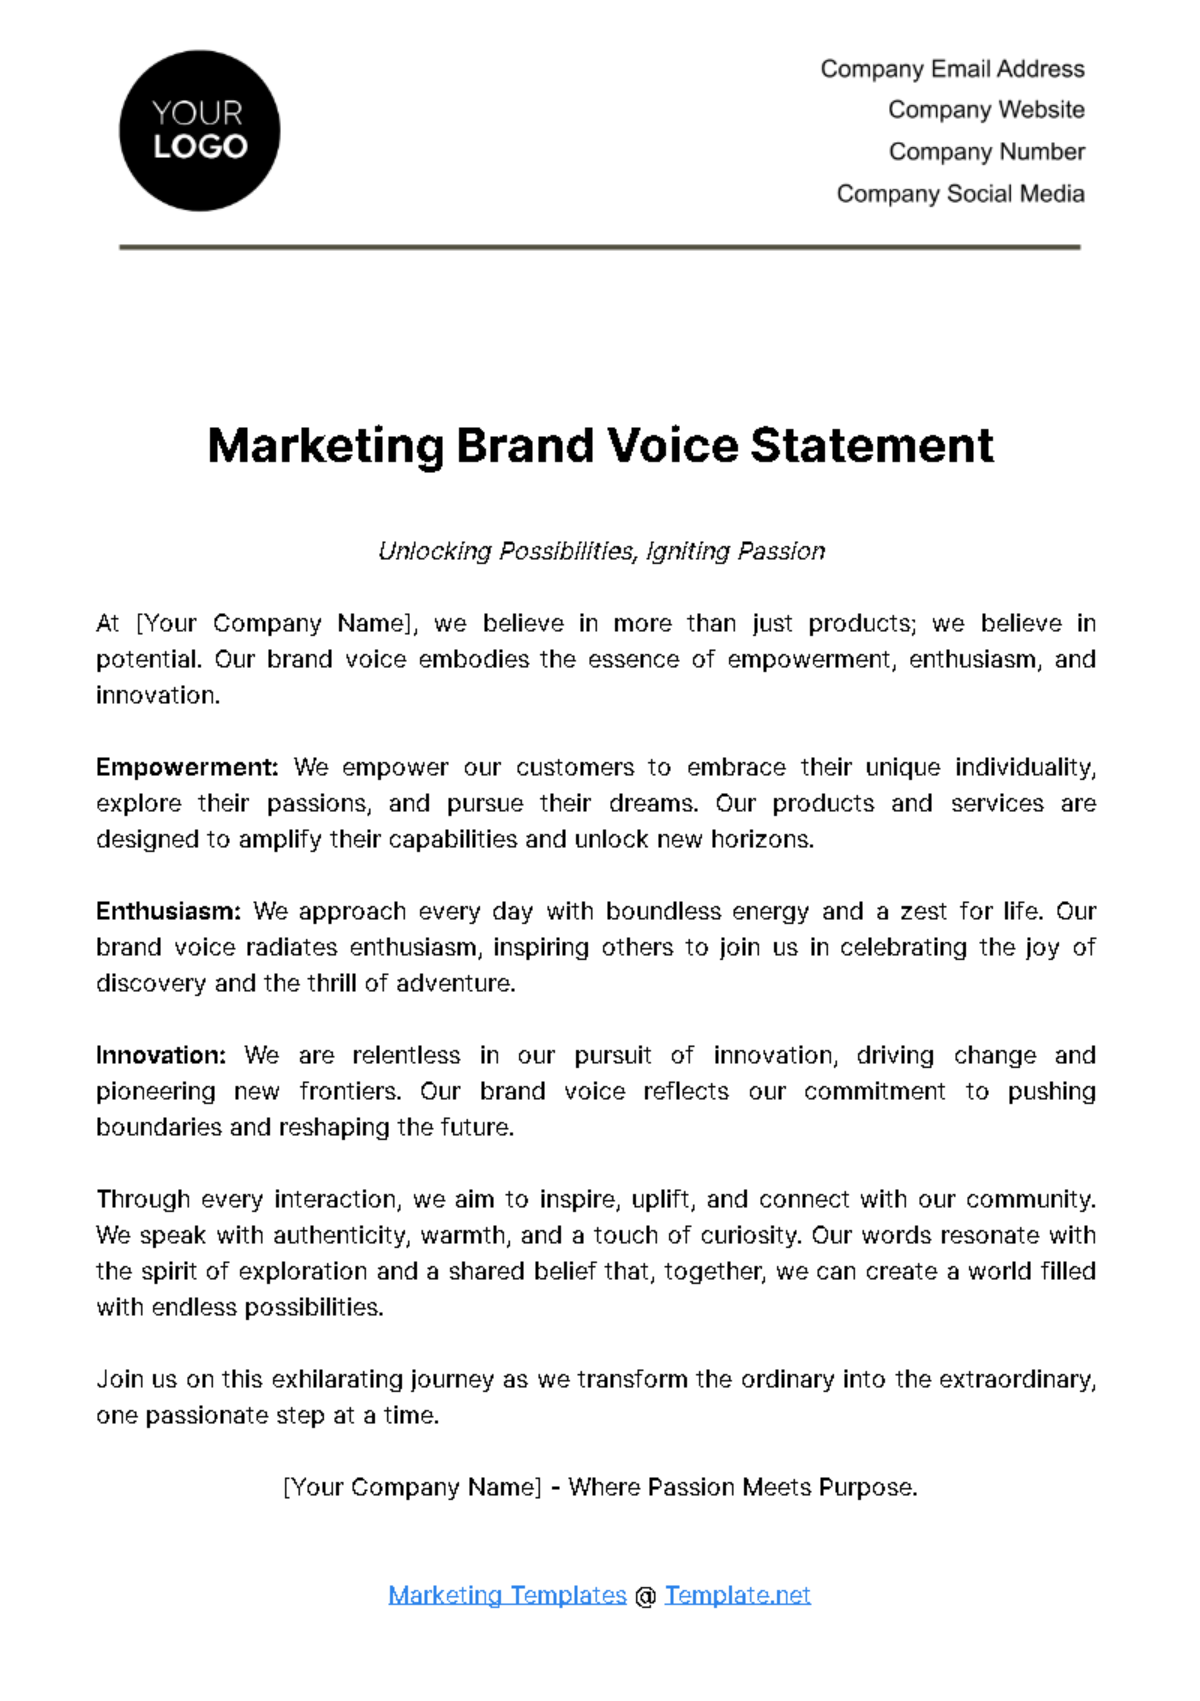 Free Marketing Brand Voice Statement Template